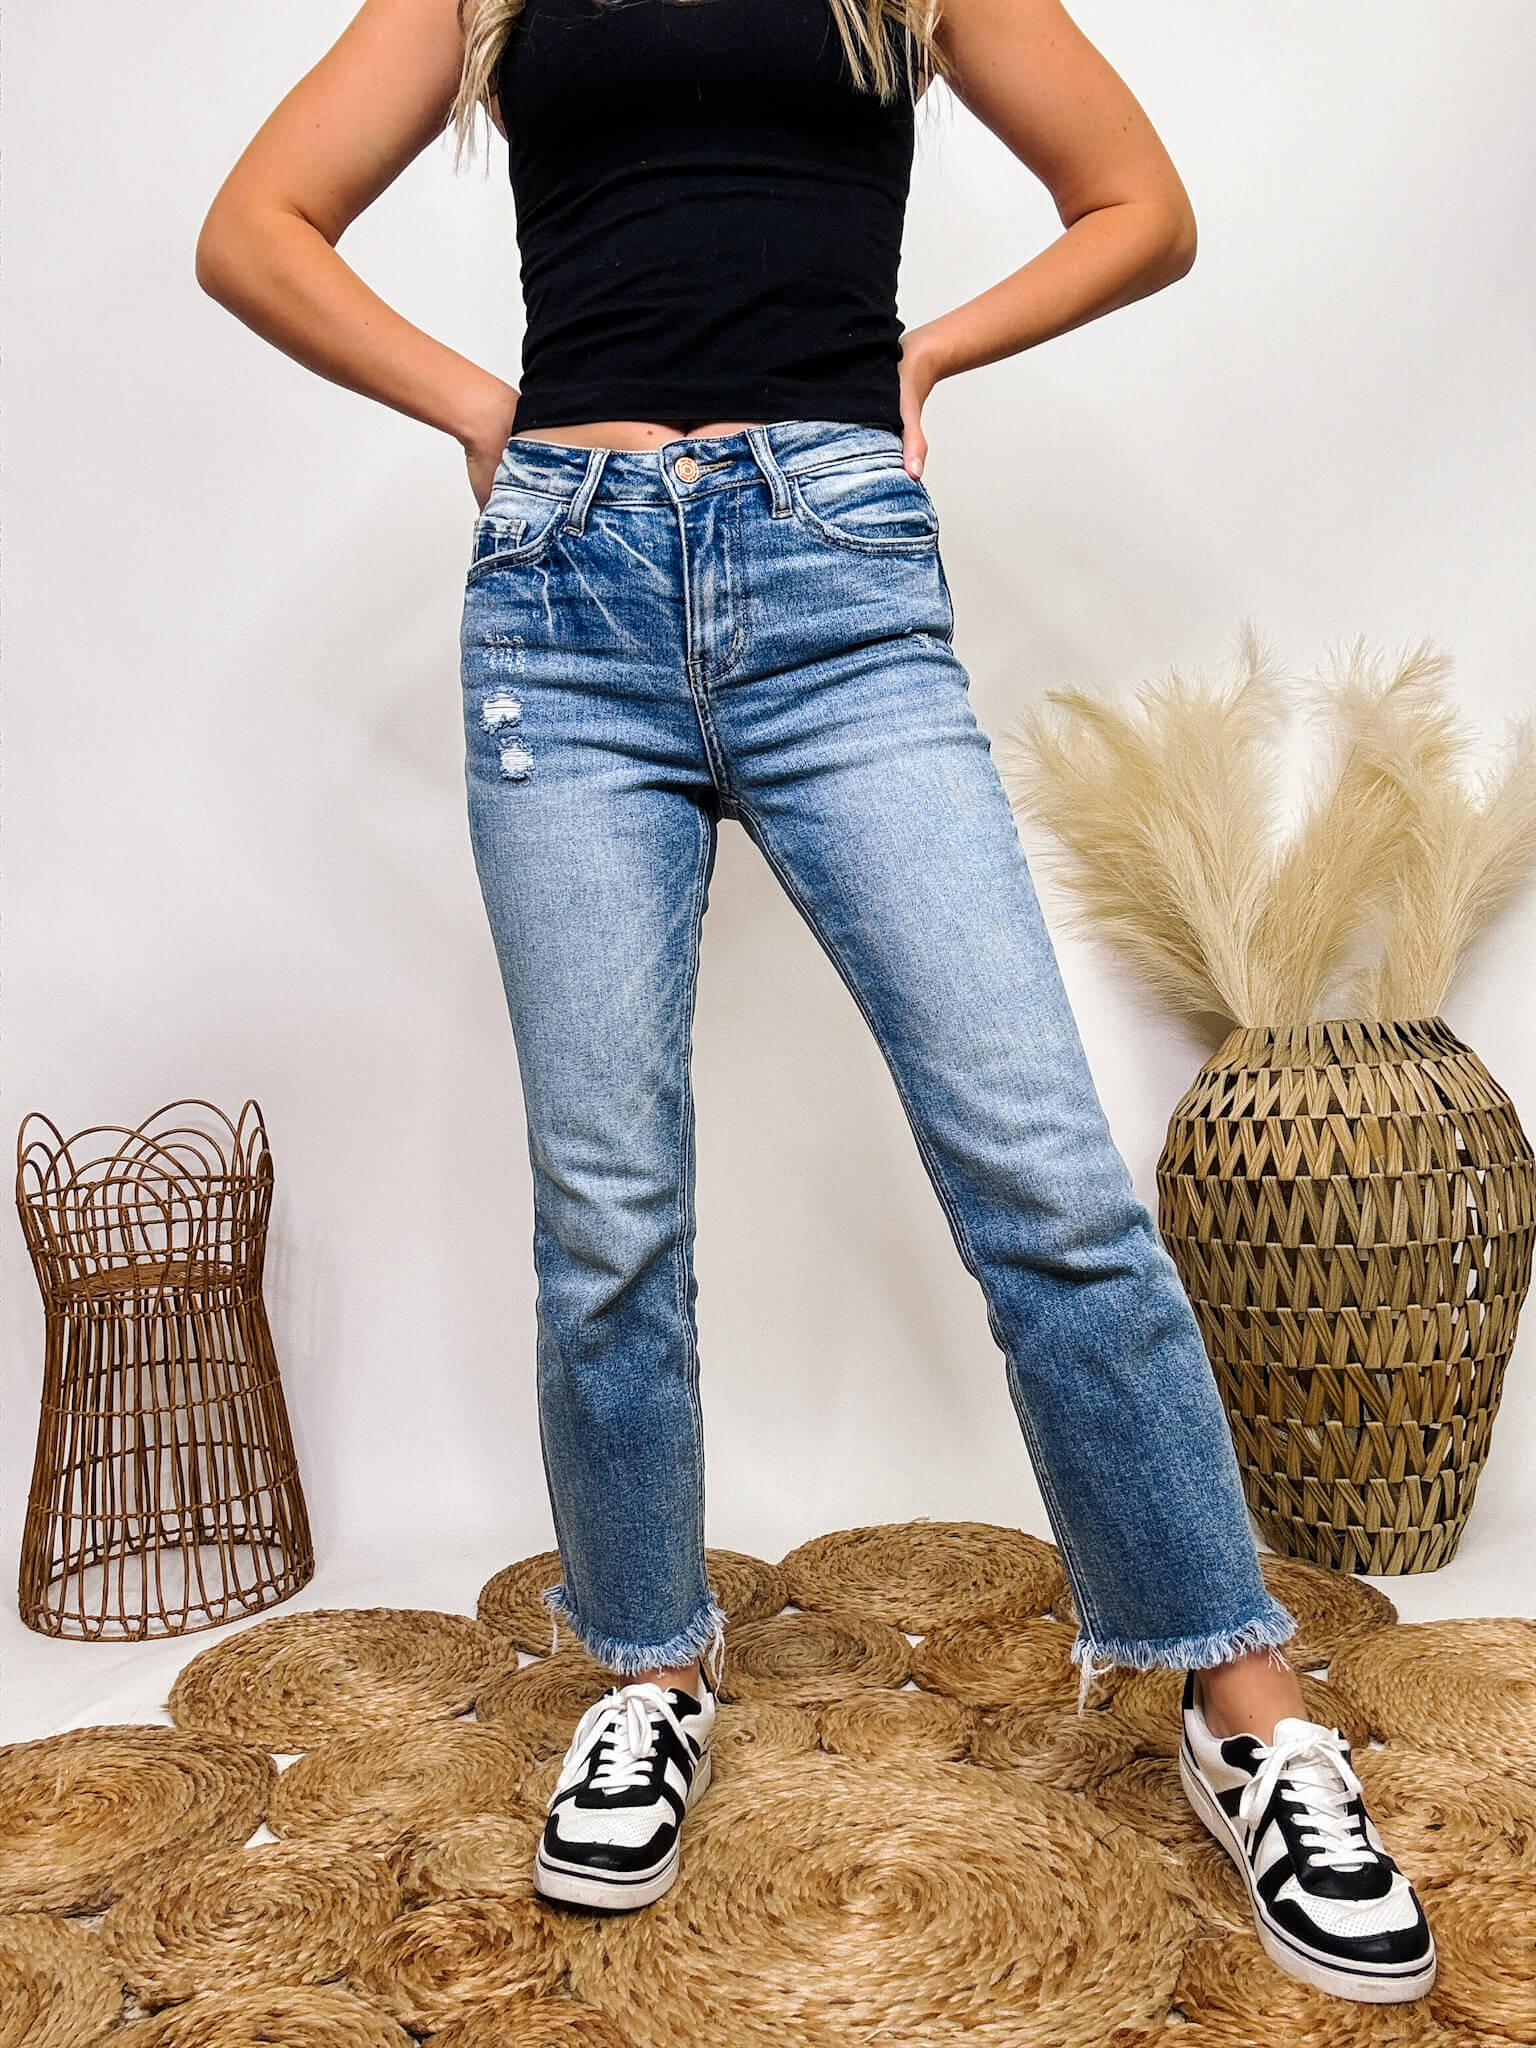 FLYING MONKEY Jeans Size 28 Womens Low Rise Distressed Skinny Denim | eBay